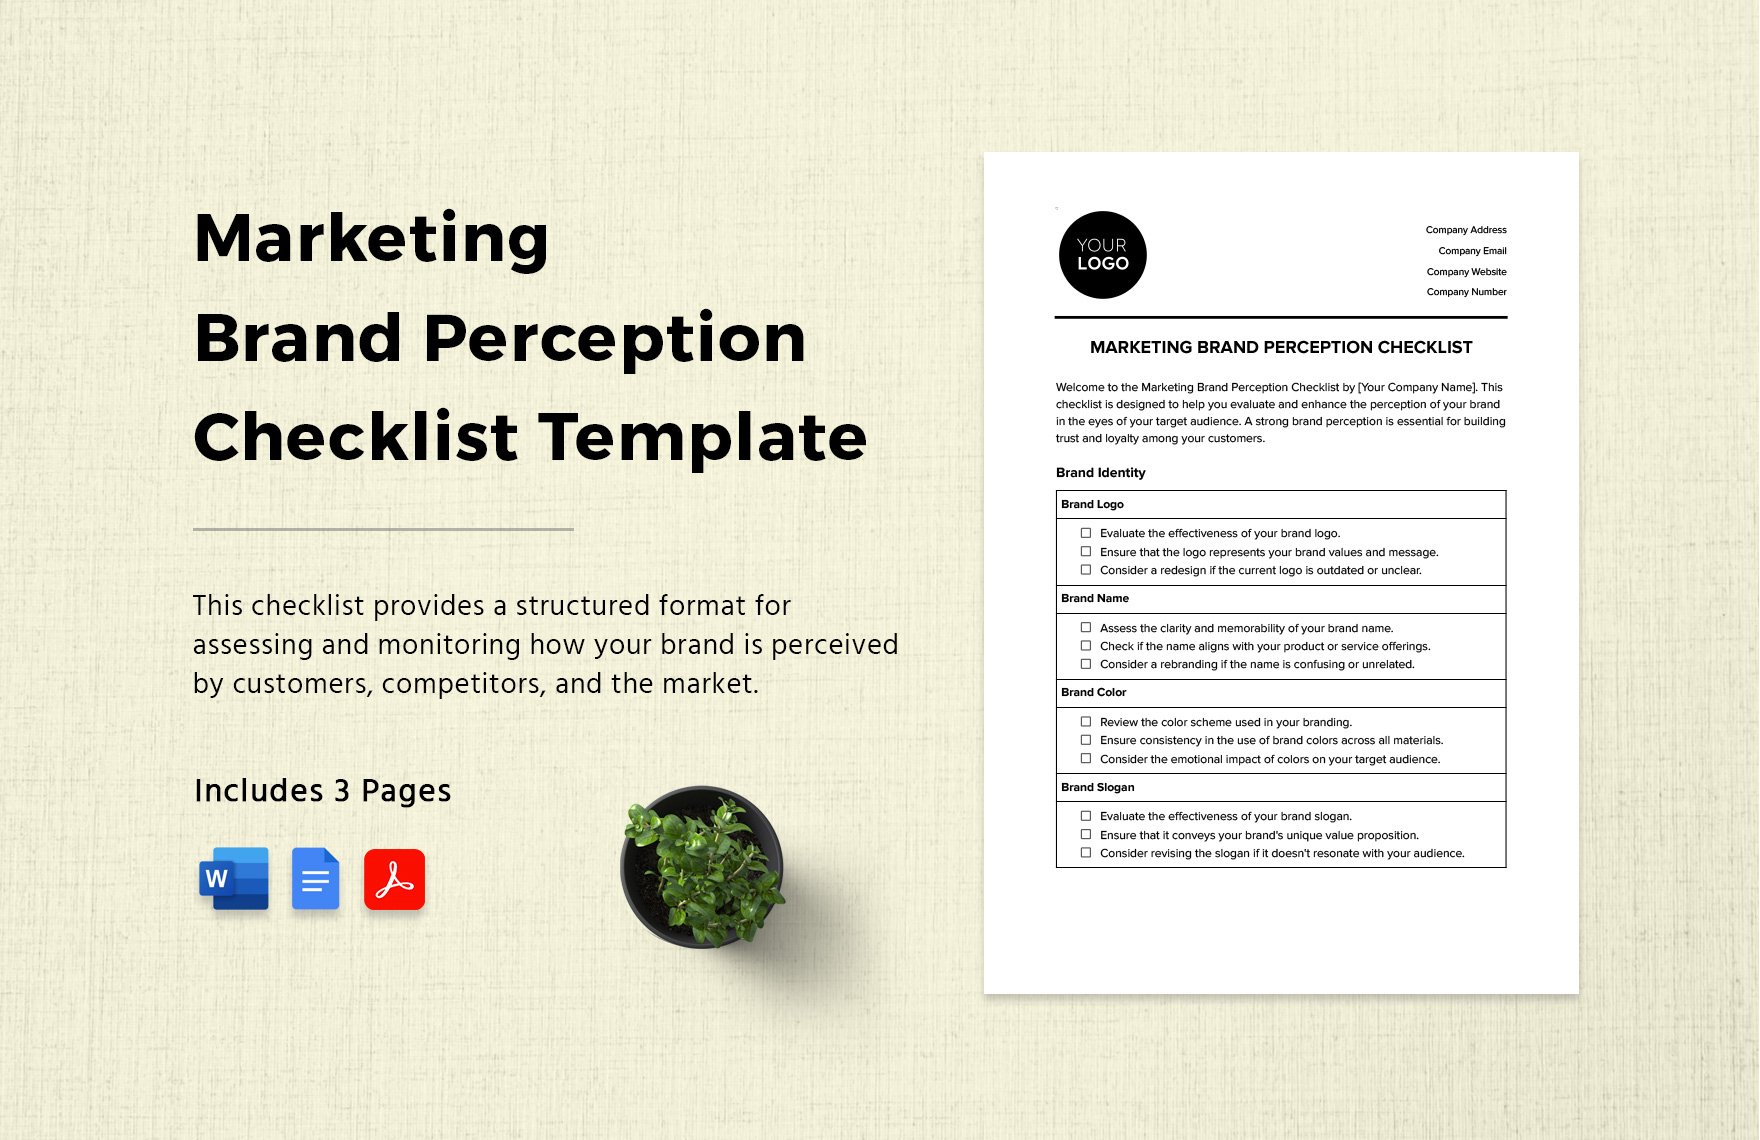 Marketing Brand Perception Checklist Template in Word, Google Docs, PDF